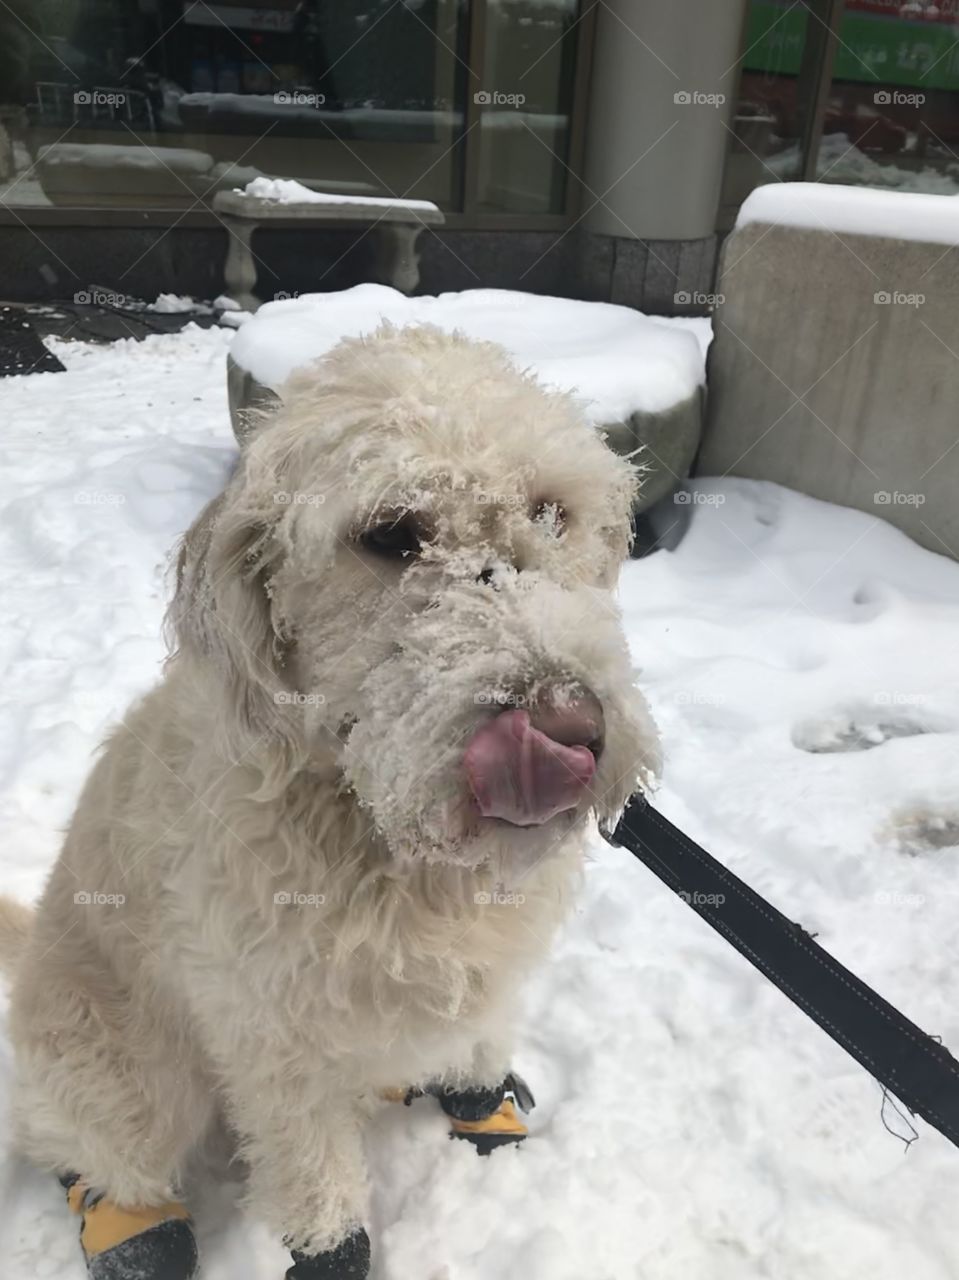 Marley enjoying the snow a bit too much